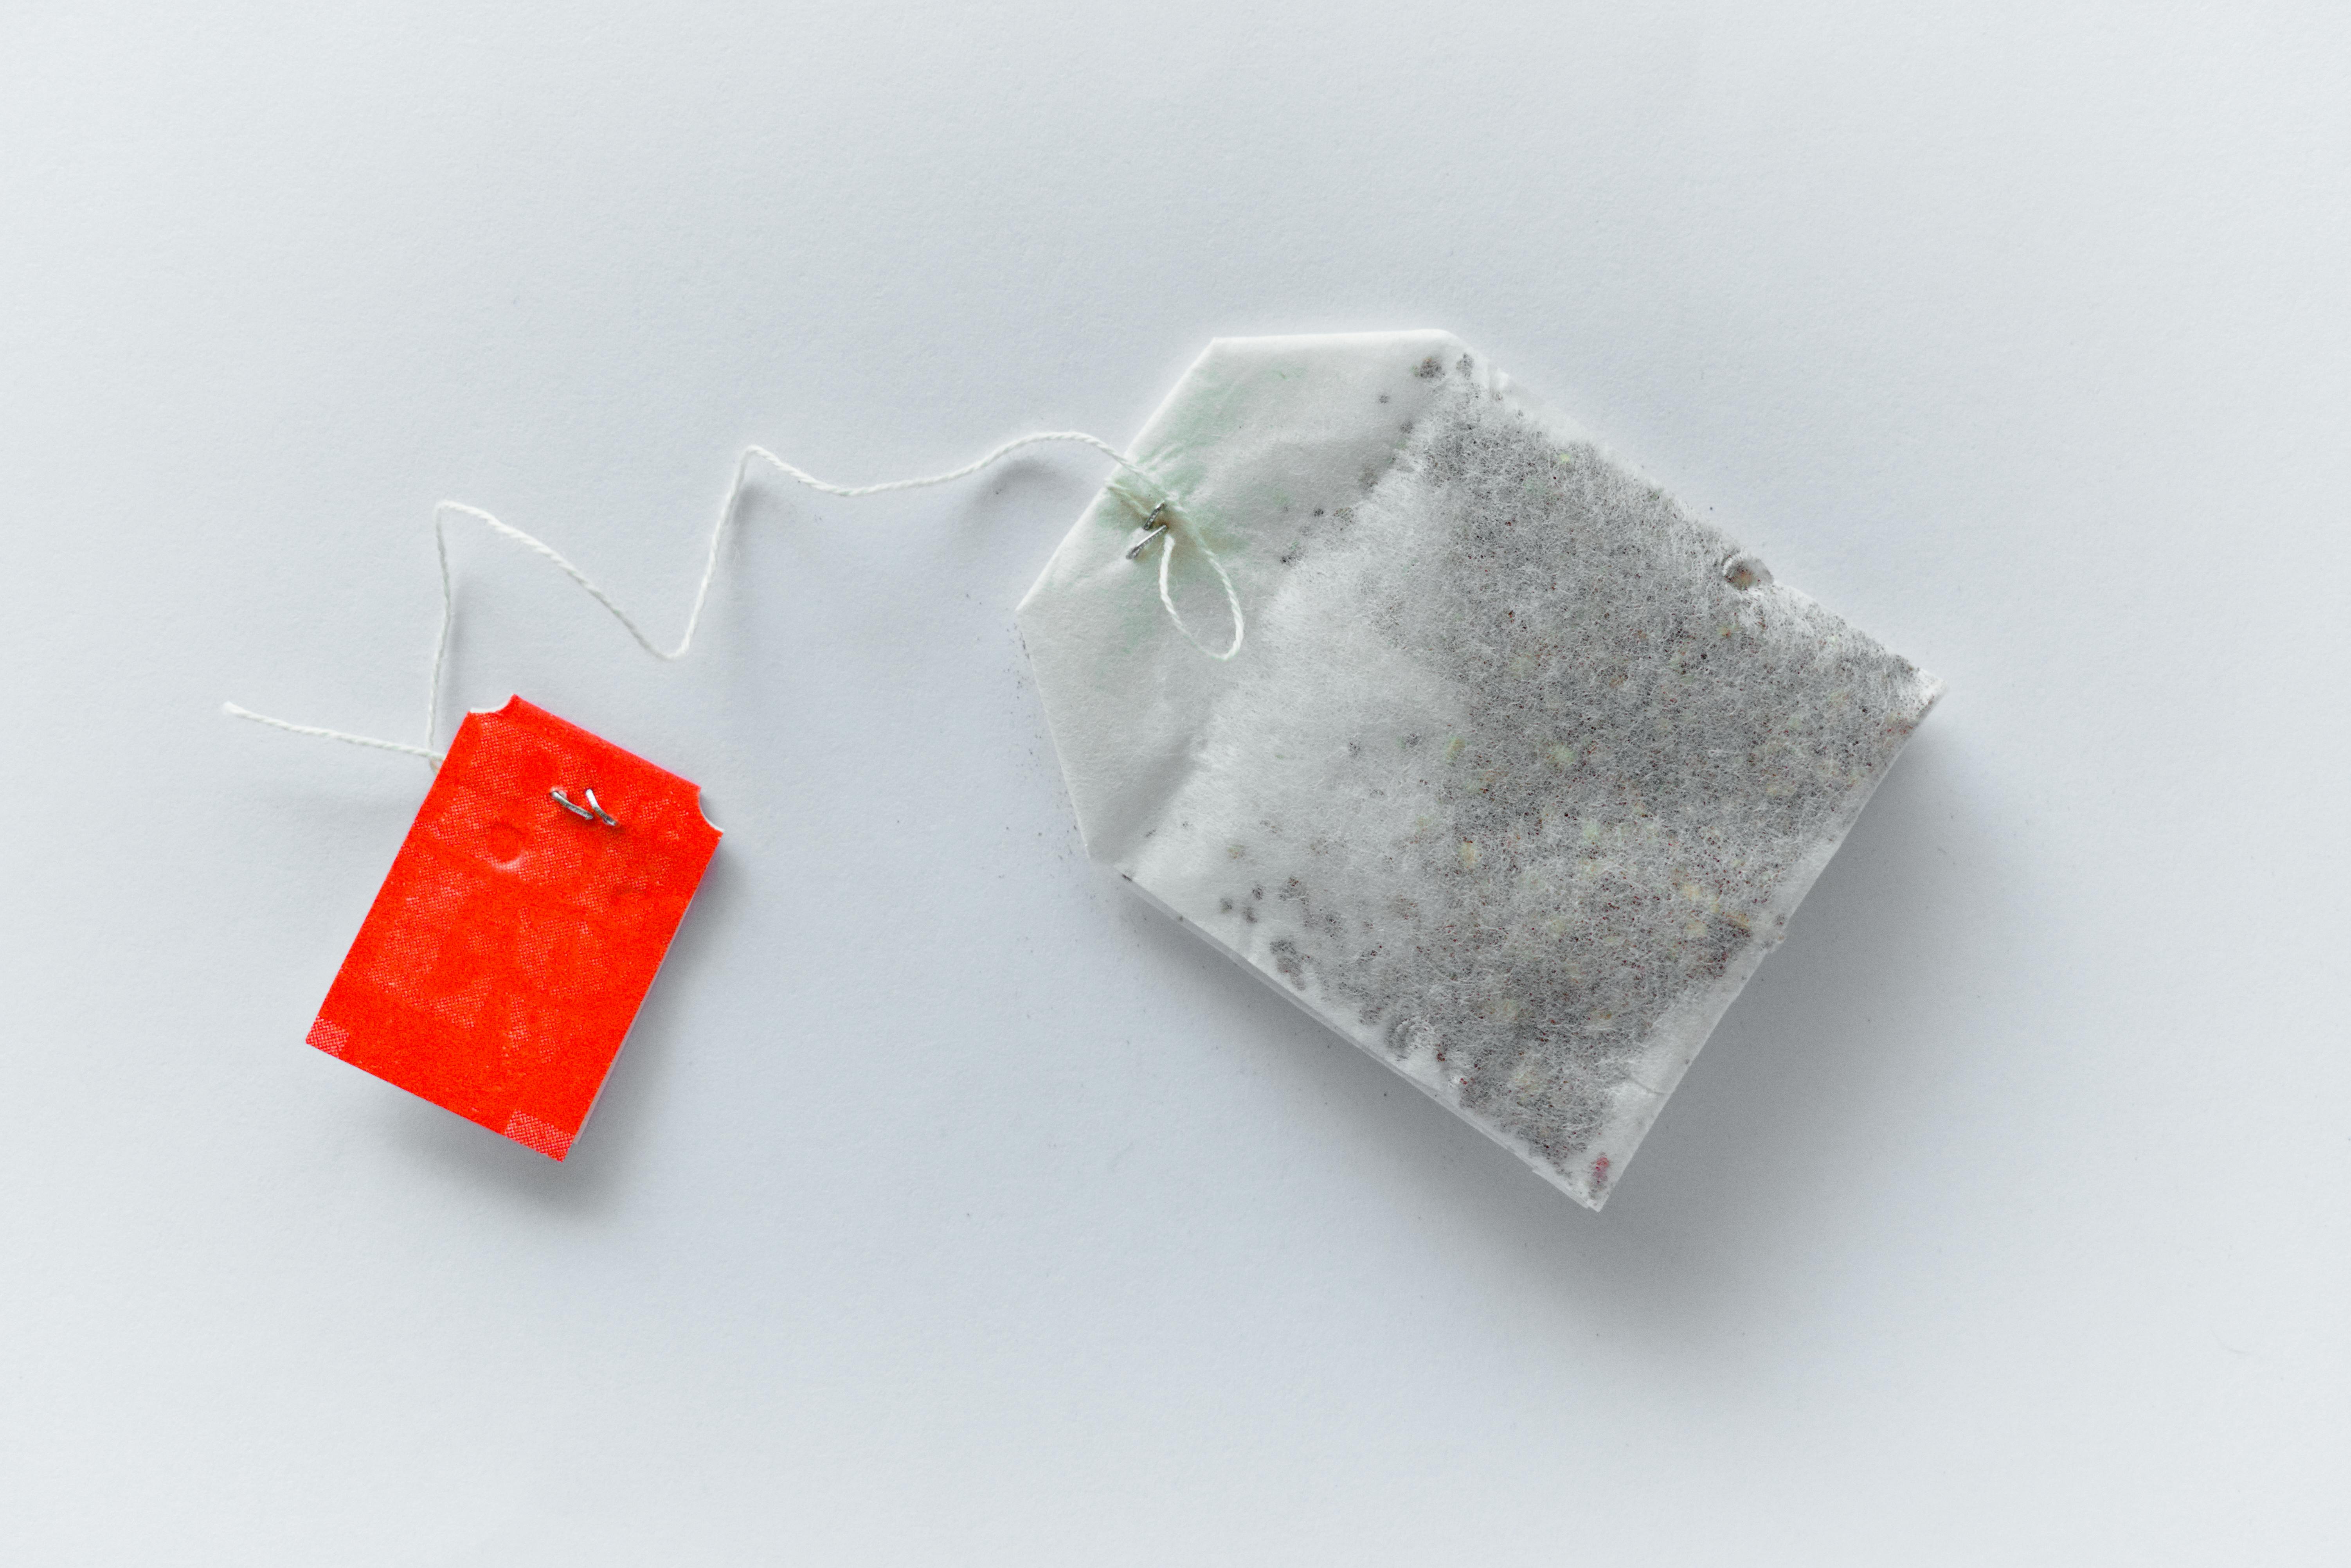 Free stock photo of dry tea, orange tag, tea